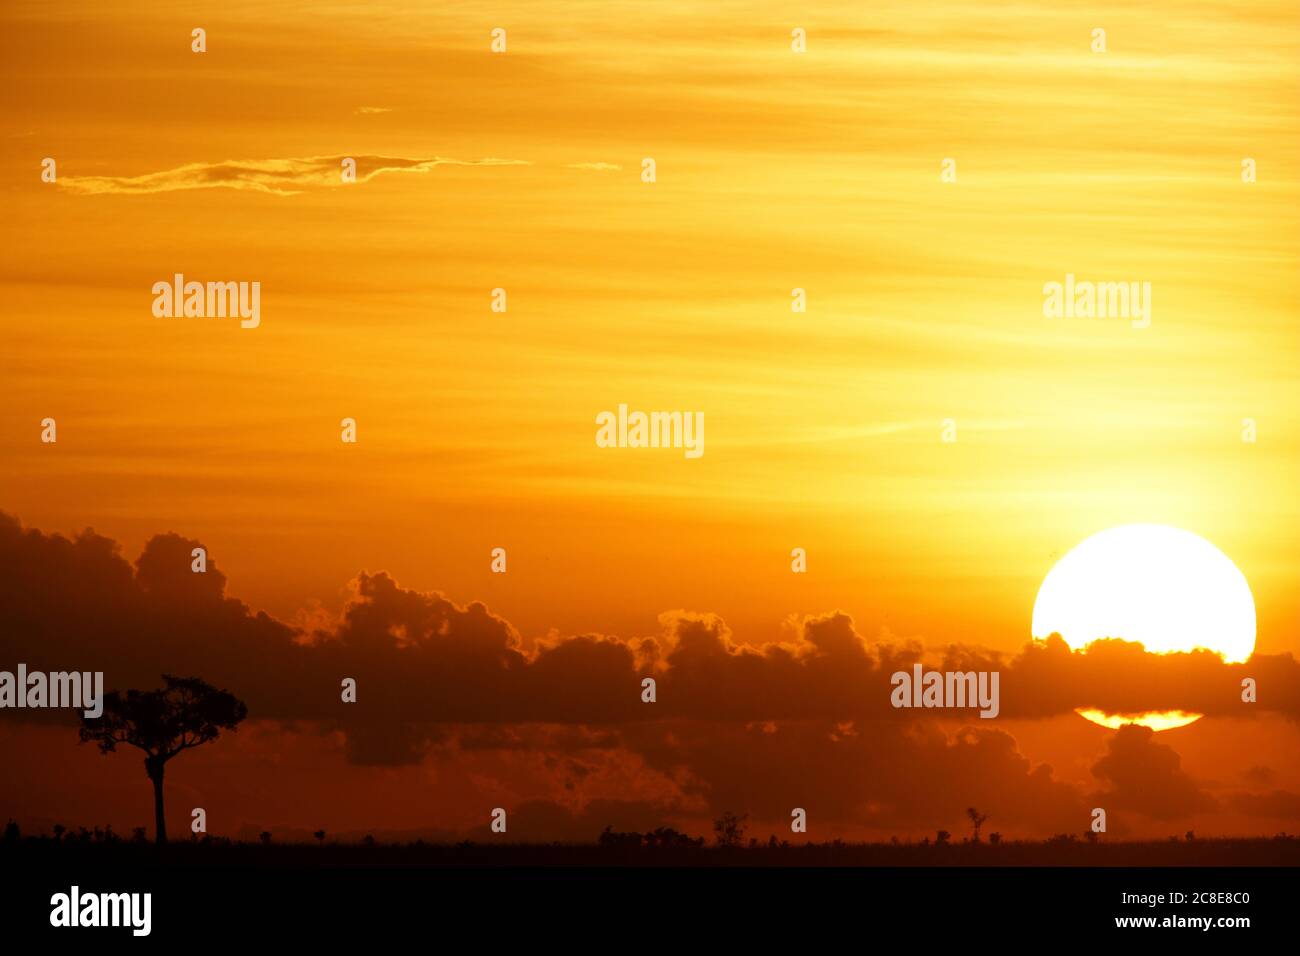 Democratic Republic Of Congo, Garamba National Park at moody sunset Stock Photo